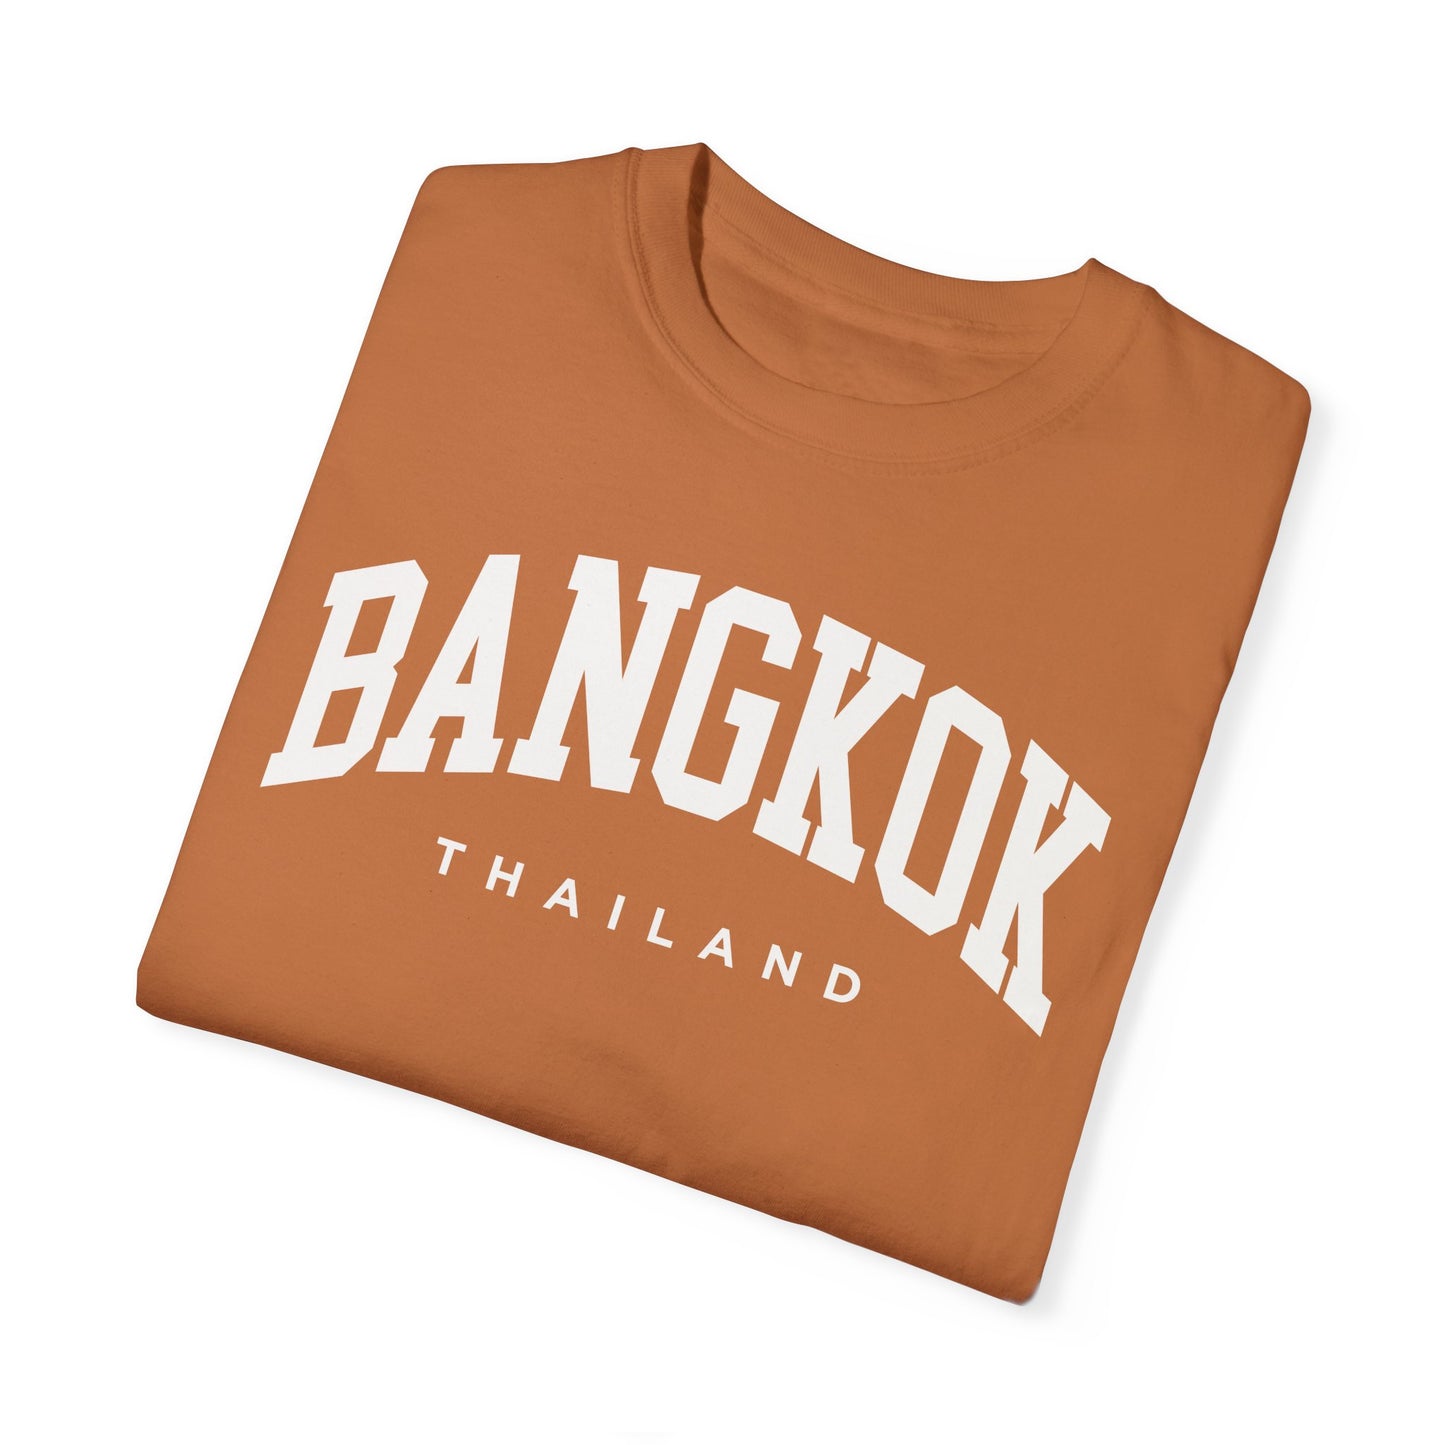 Bangkok Thailand Comfort Colors® Tee